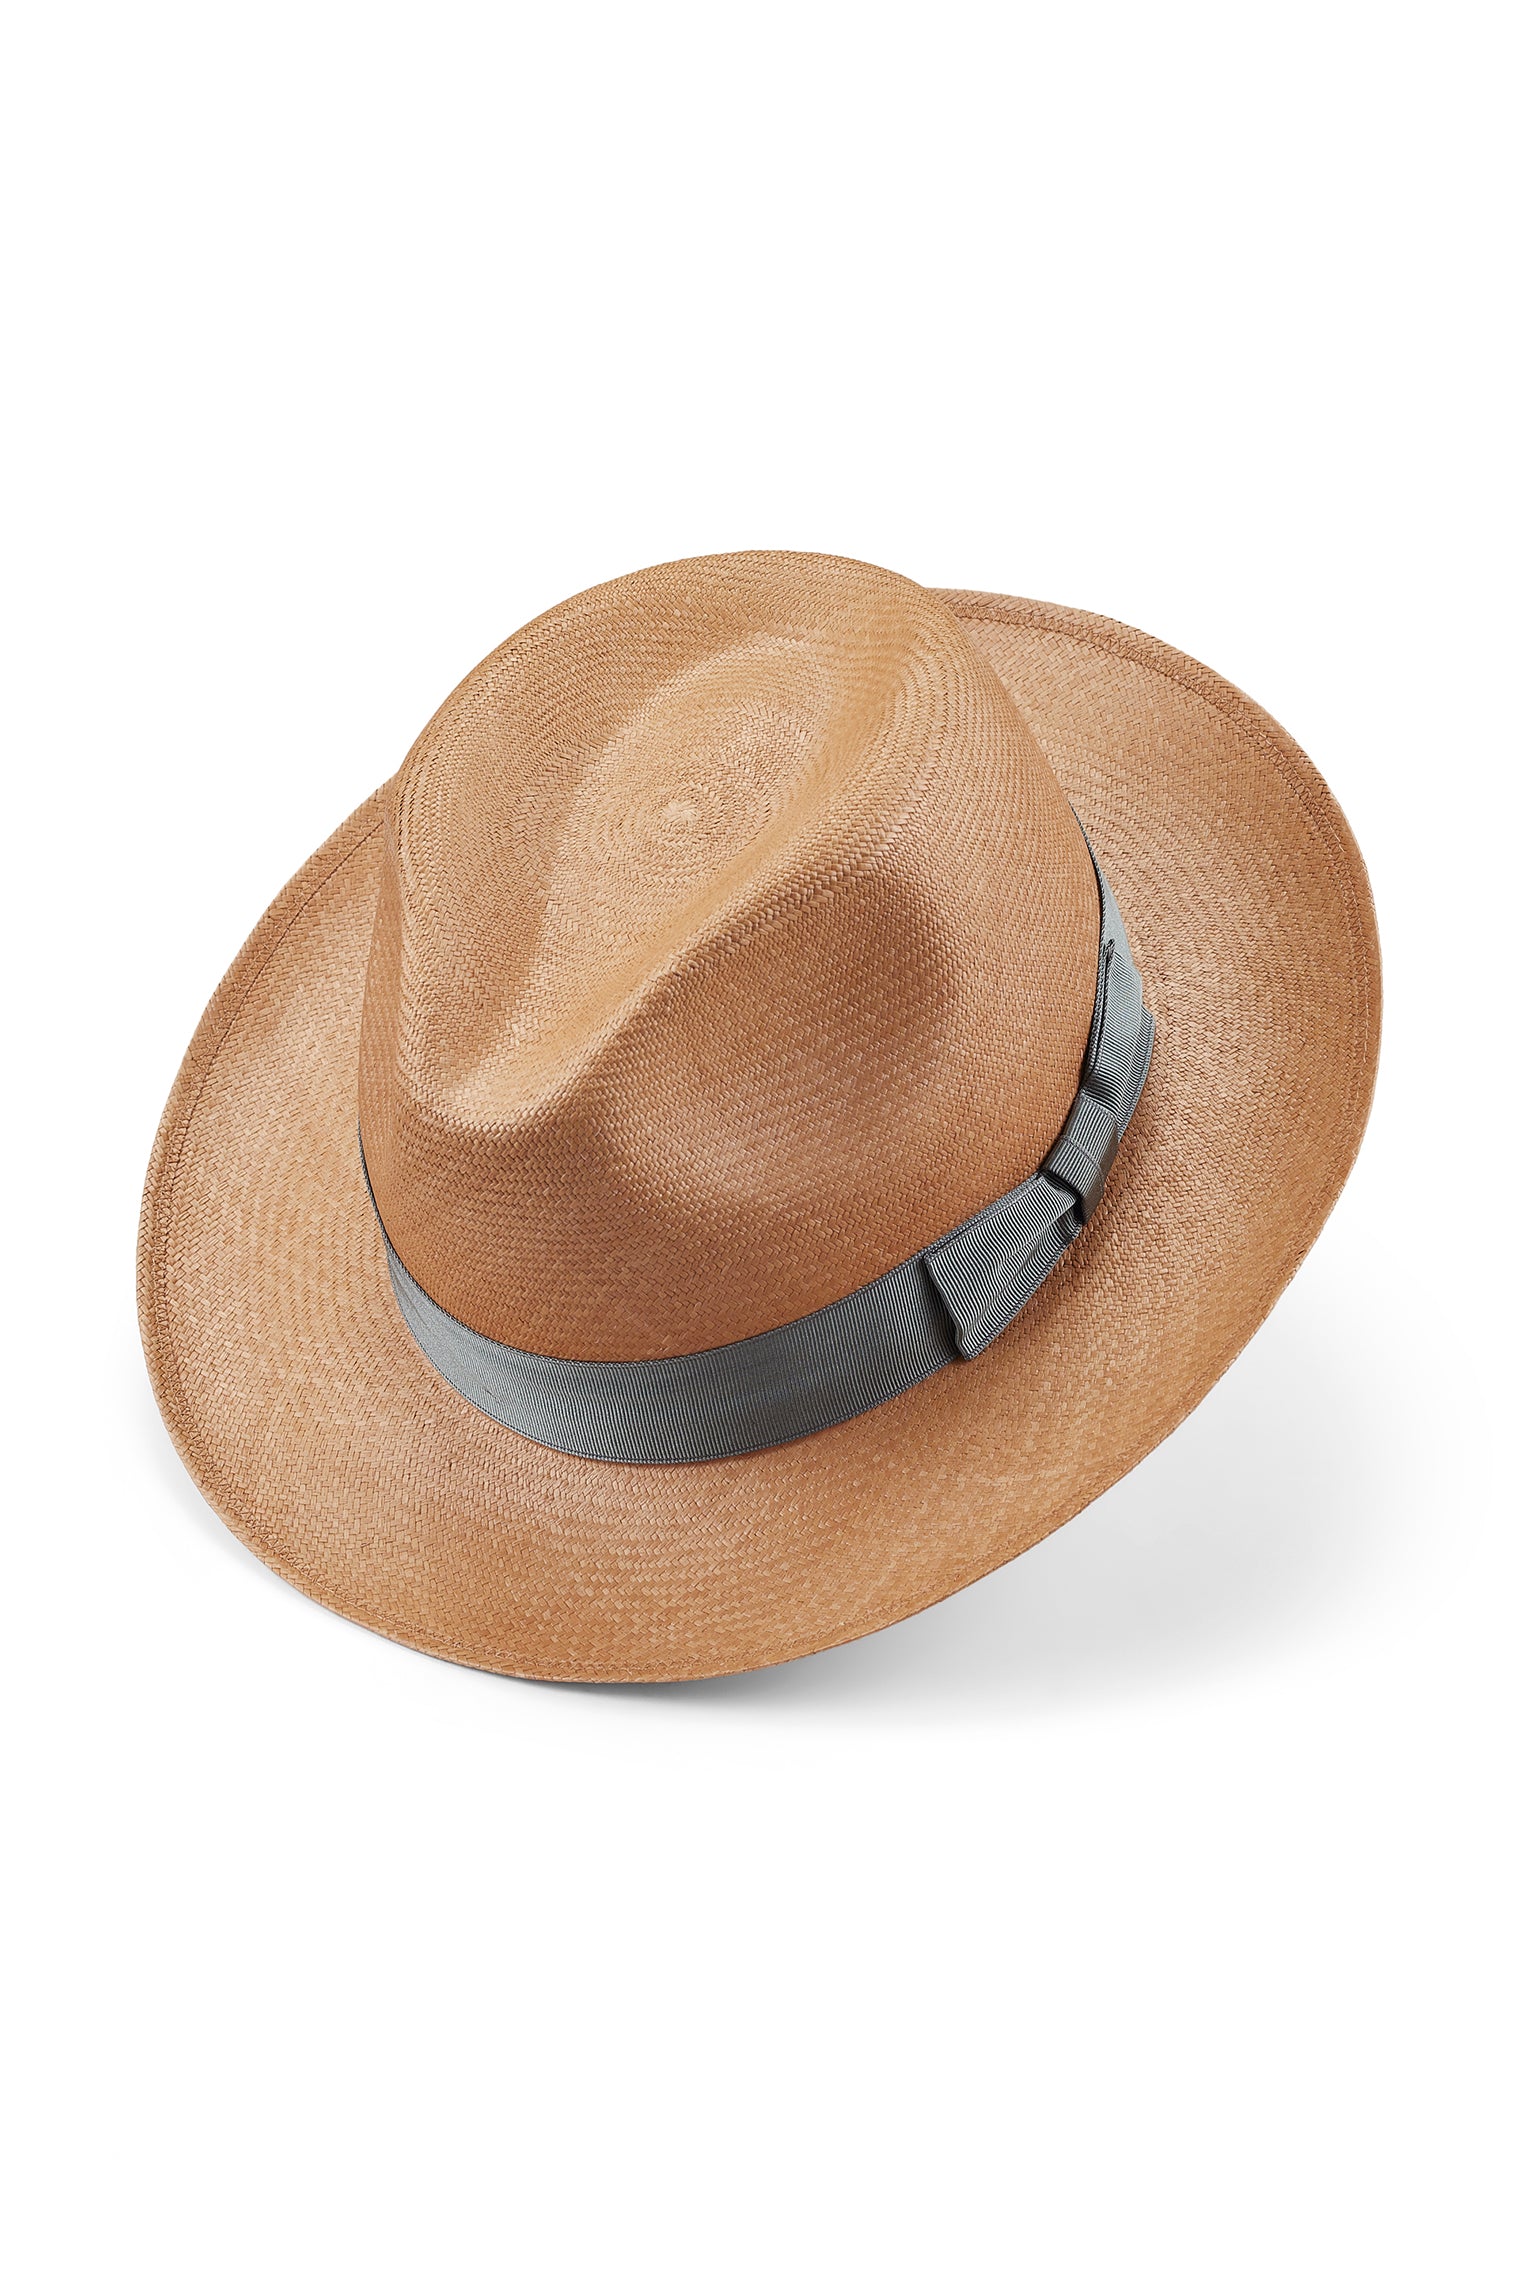 Fairbanks Mocha Panama - New Season Men's Hats - Lock & Co. Hatters London UK